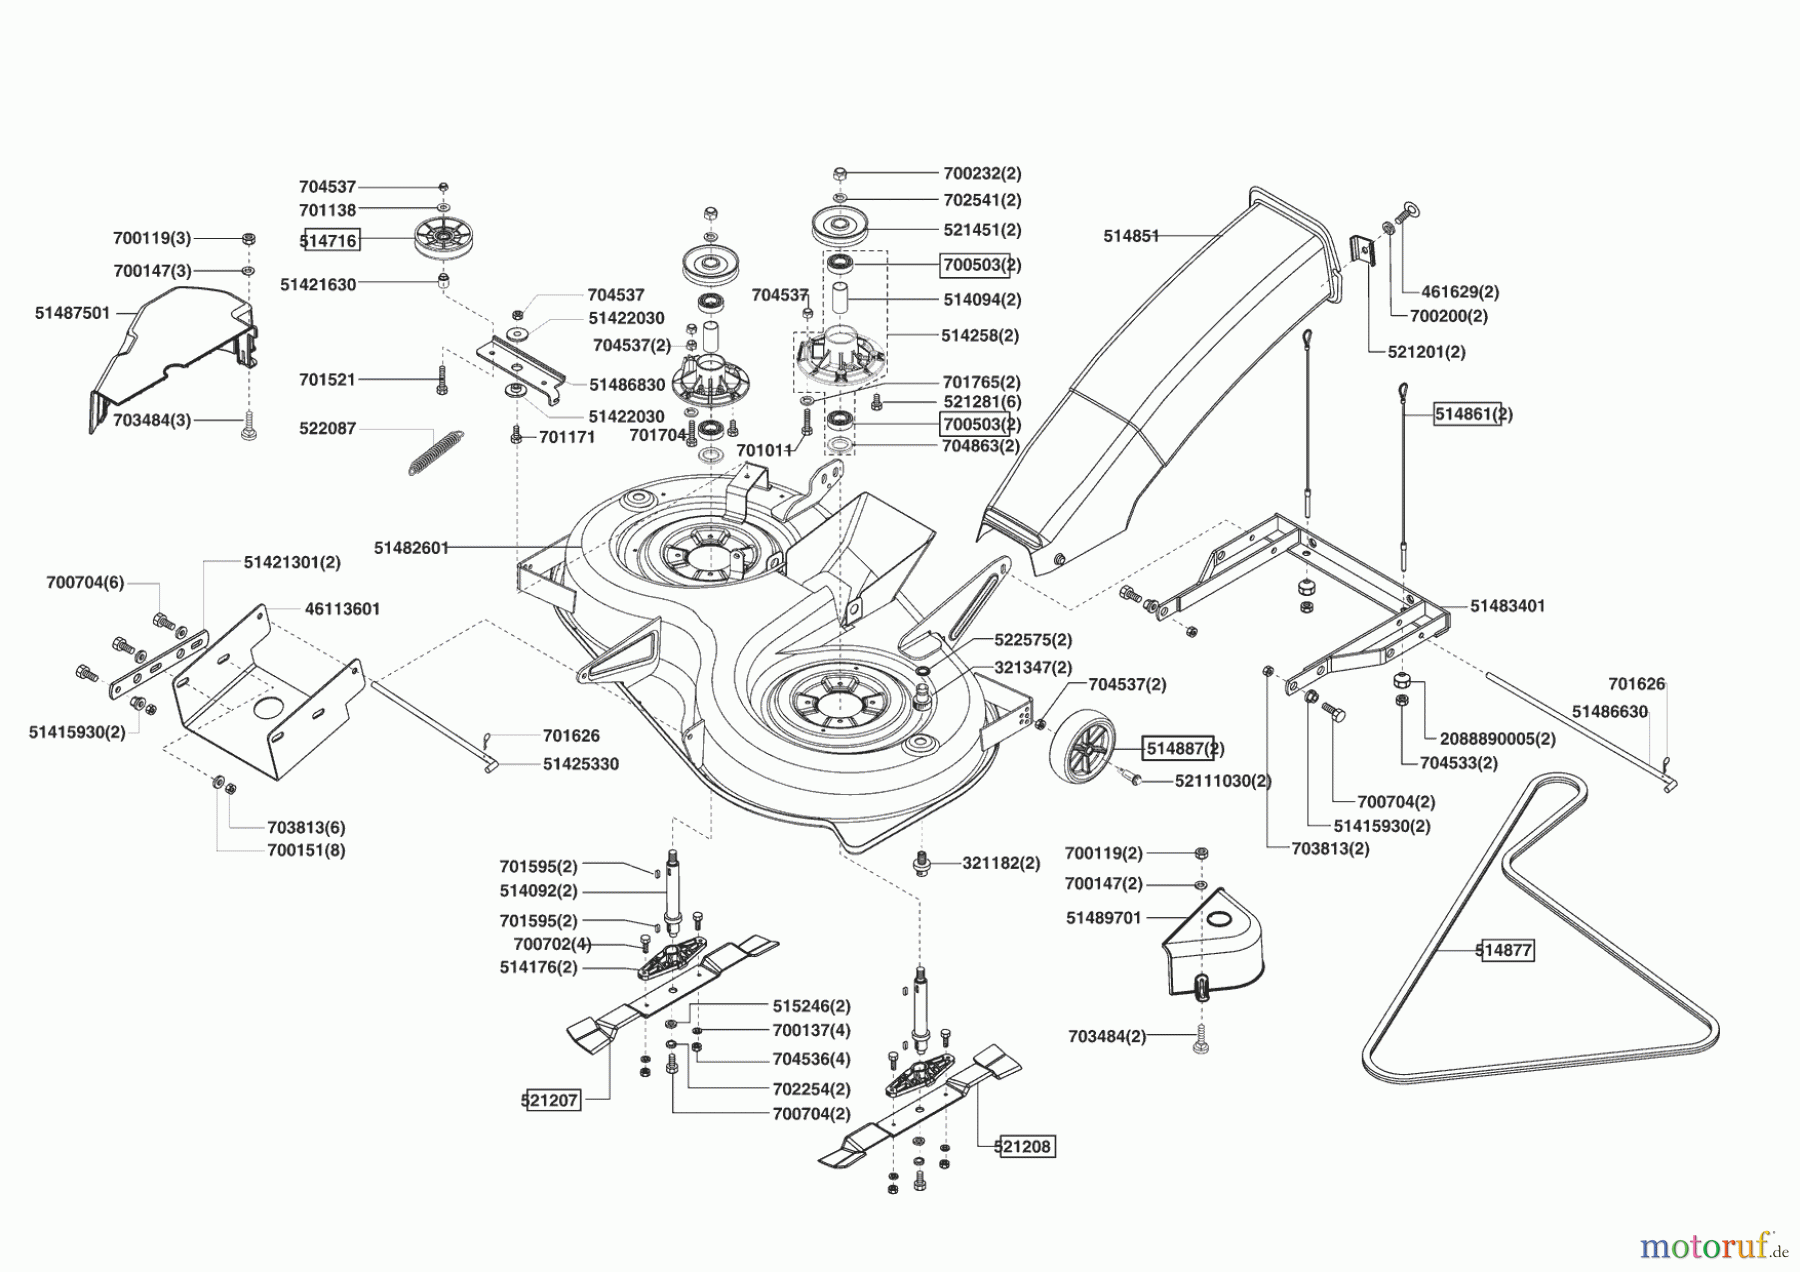  Powerline Gartentechnik Rasentraktor T 16-102 HD Honda  11/2005 Seite 5